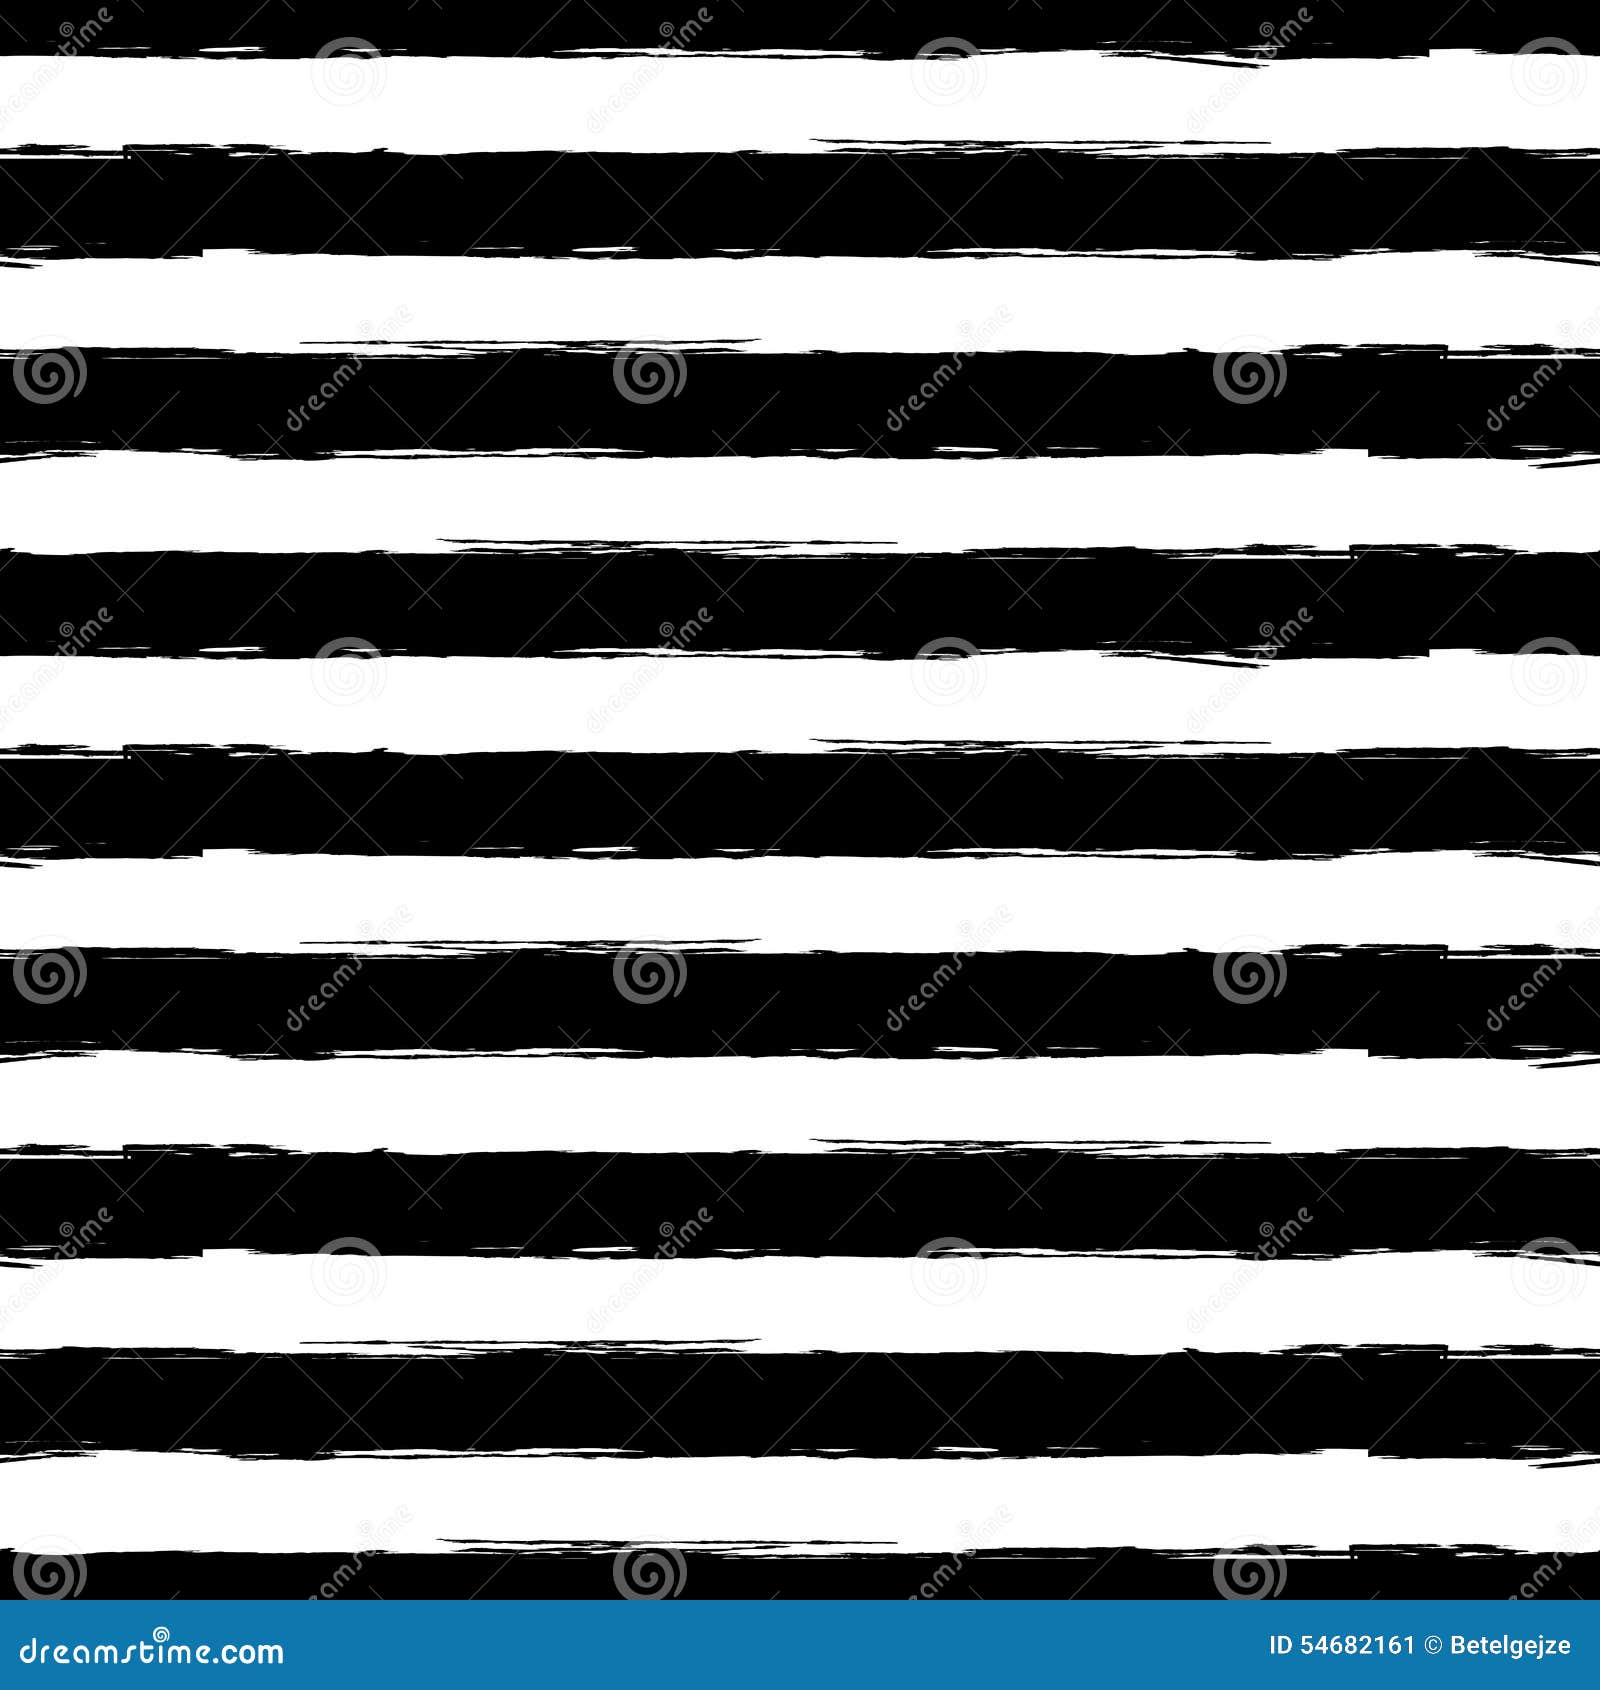  watercolor stripe grunge seamless pattern. abstract black